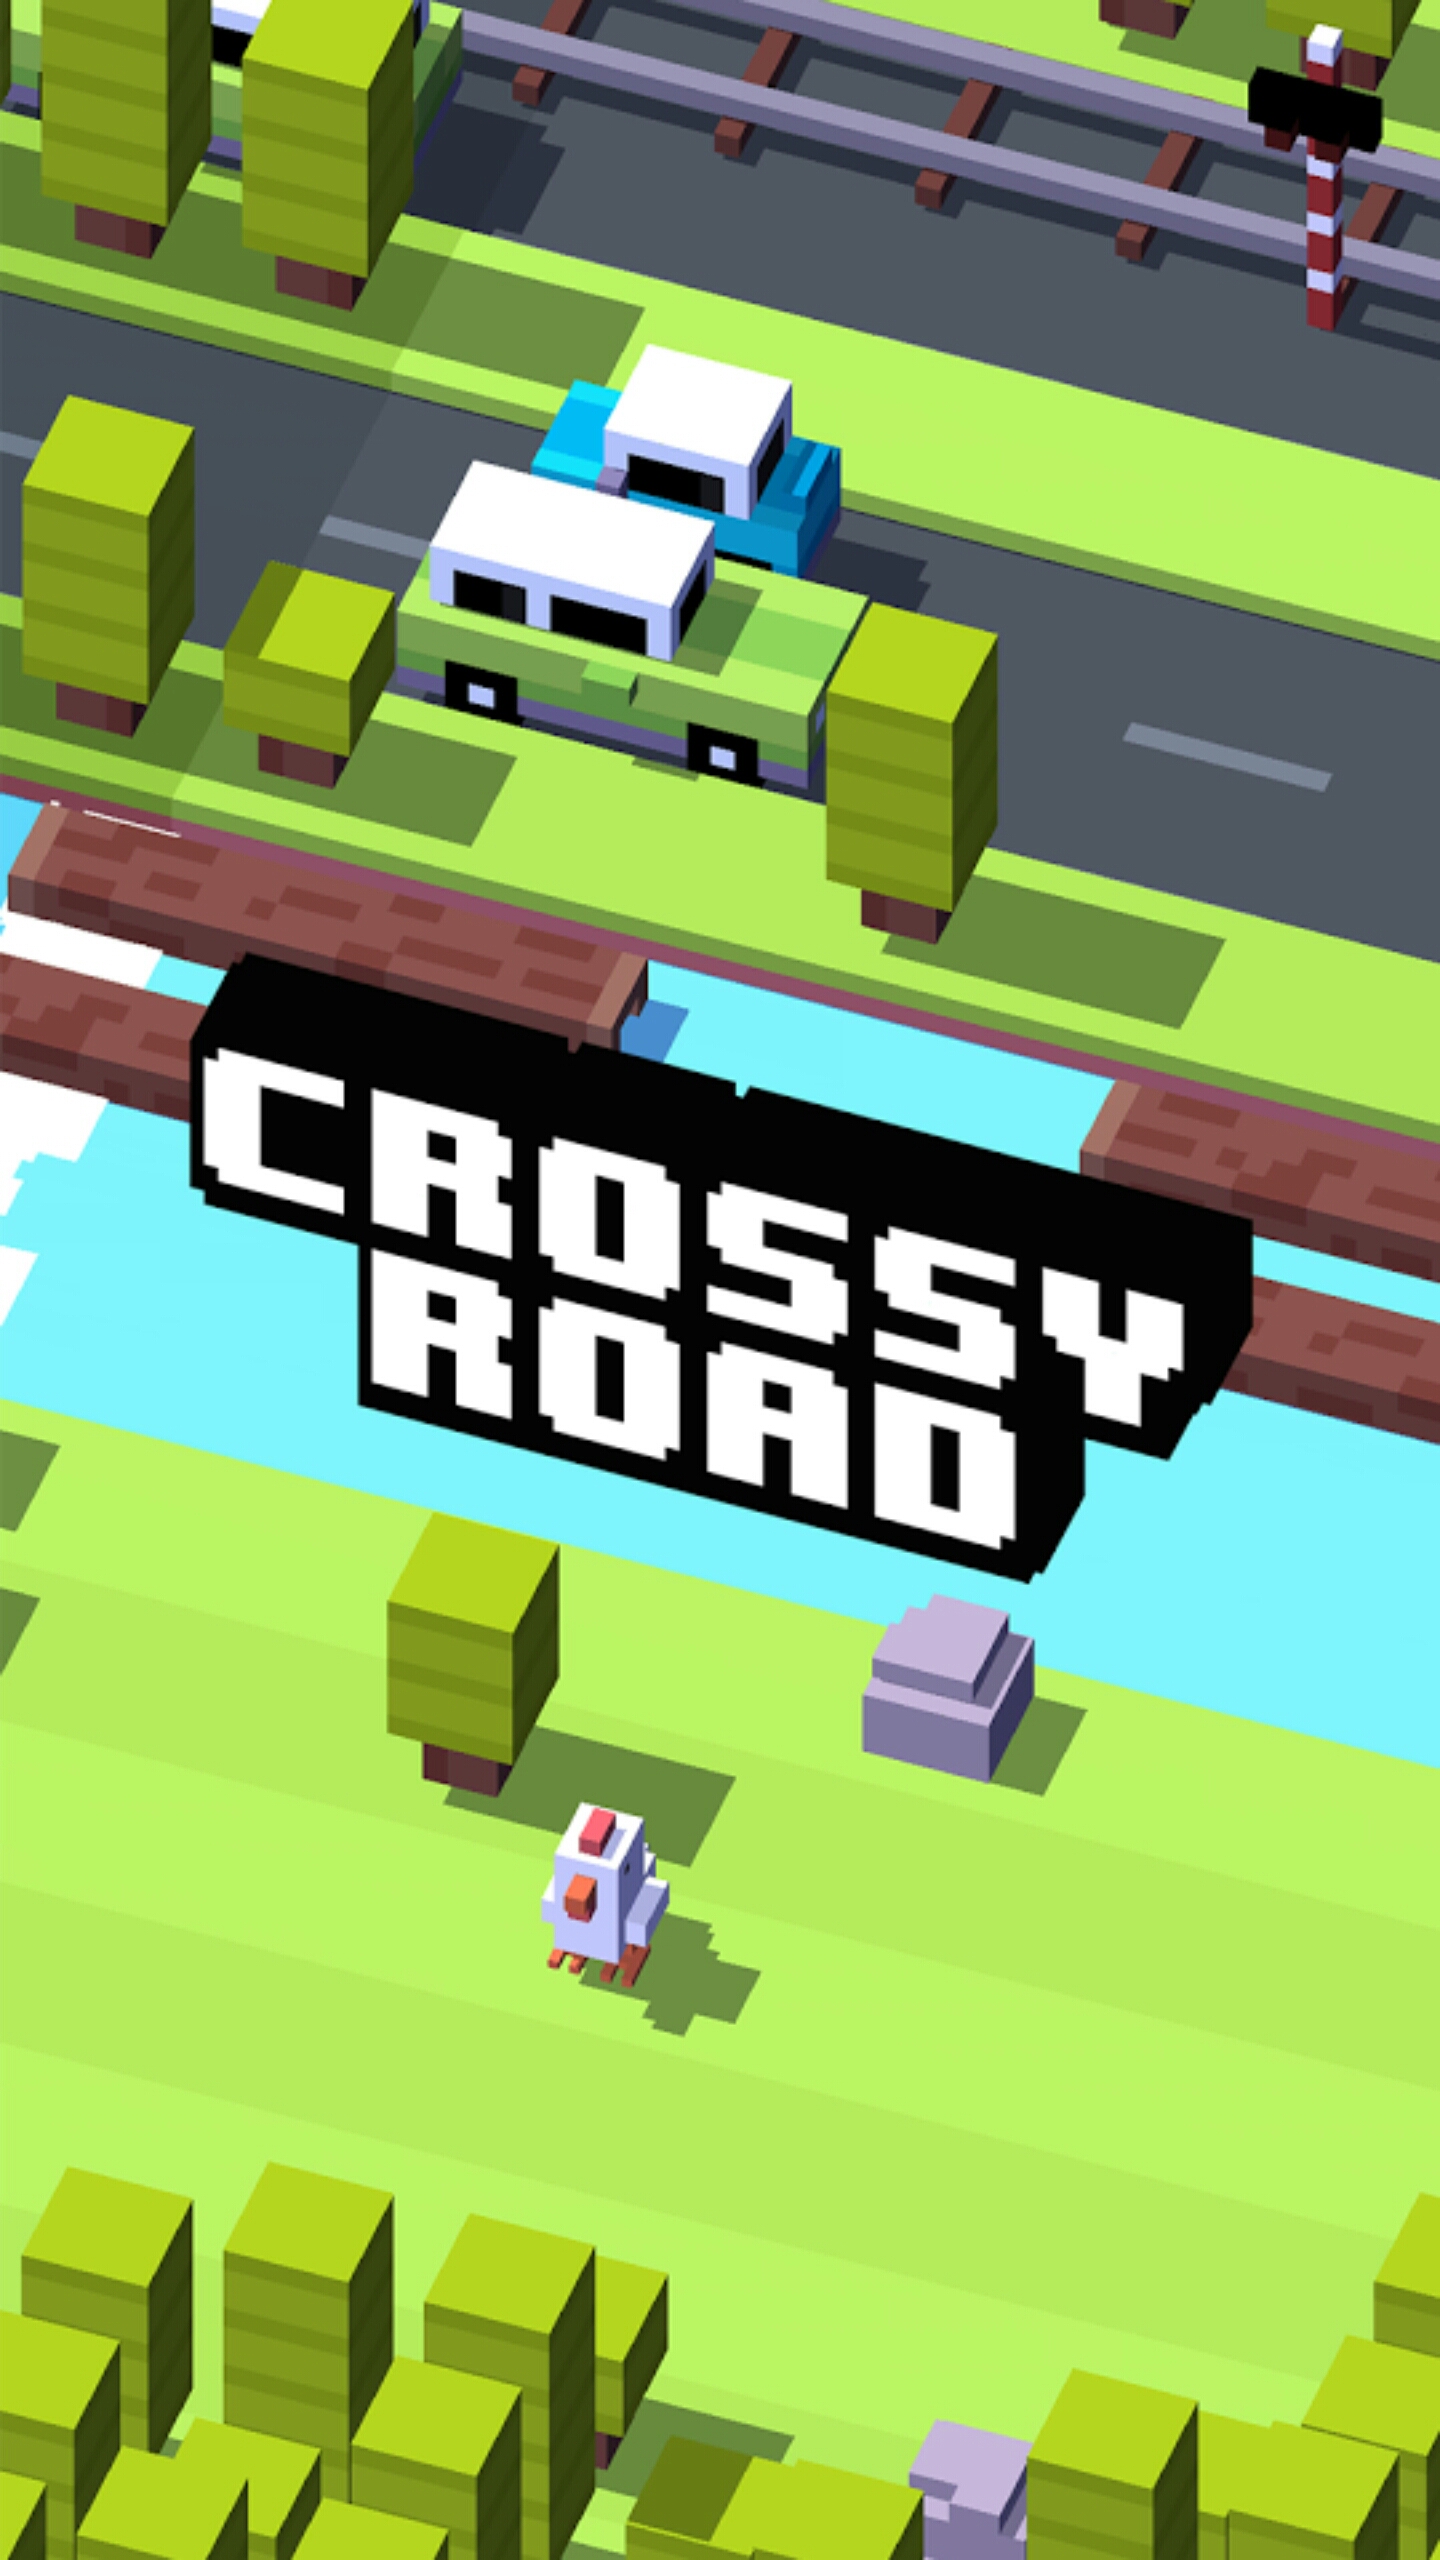 is crossy road free